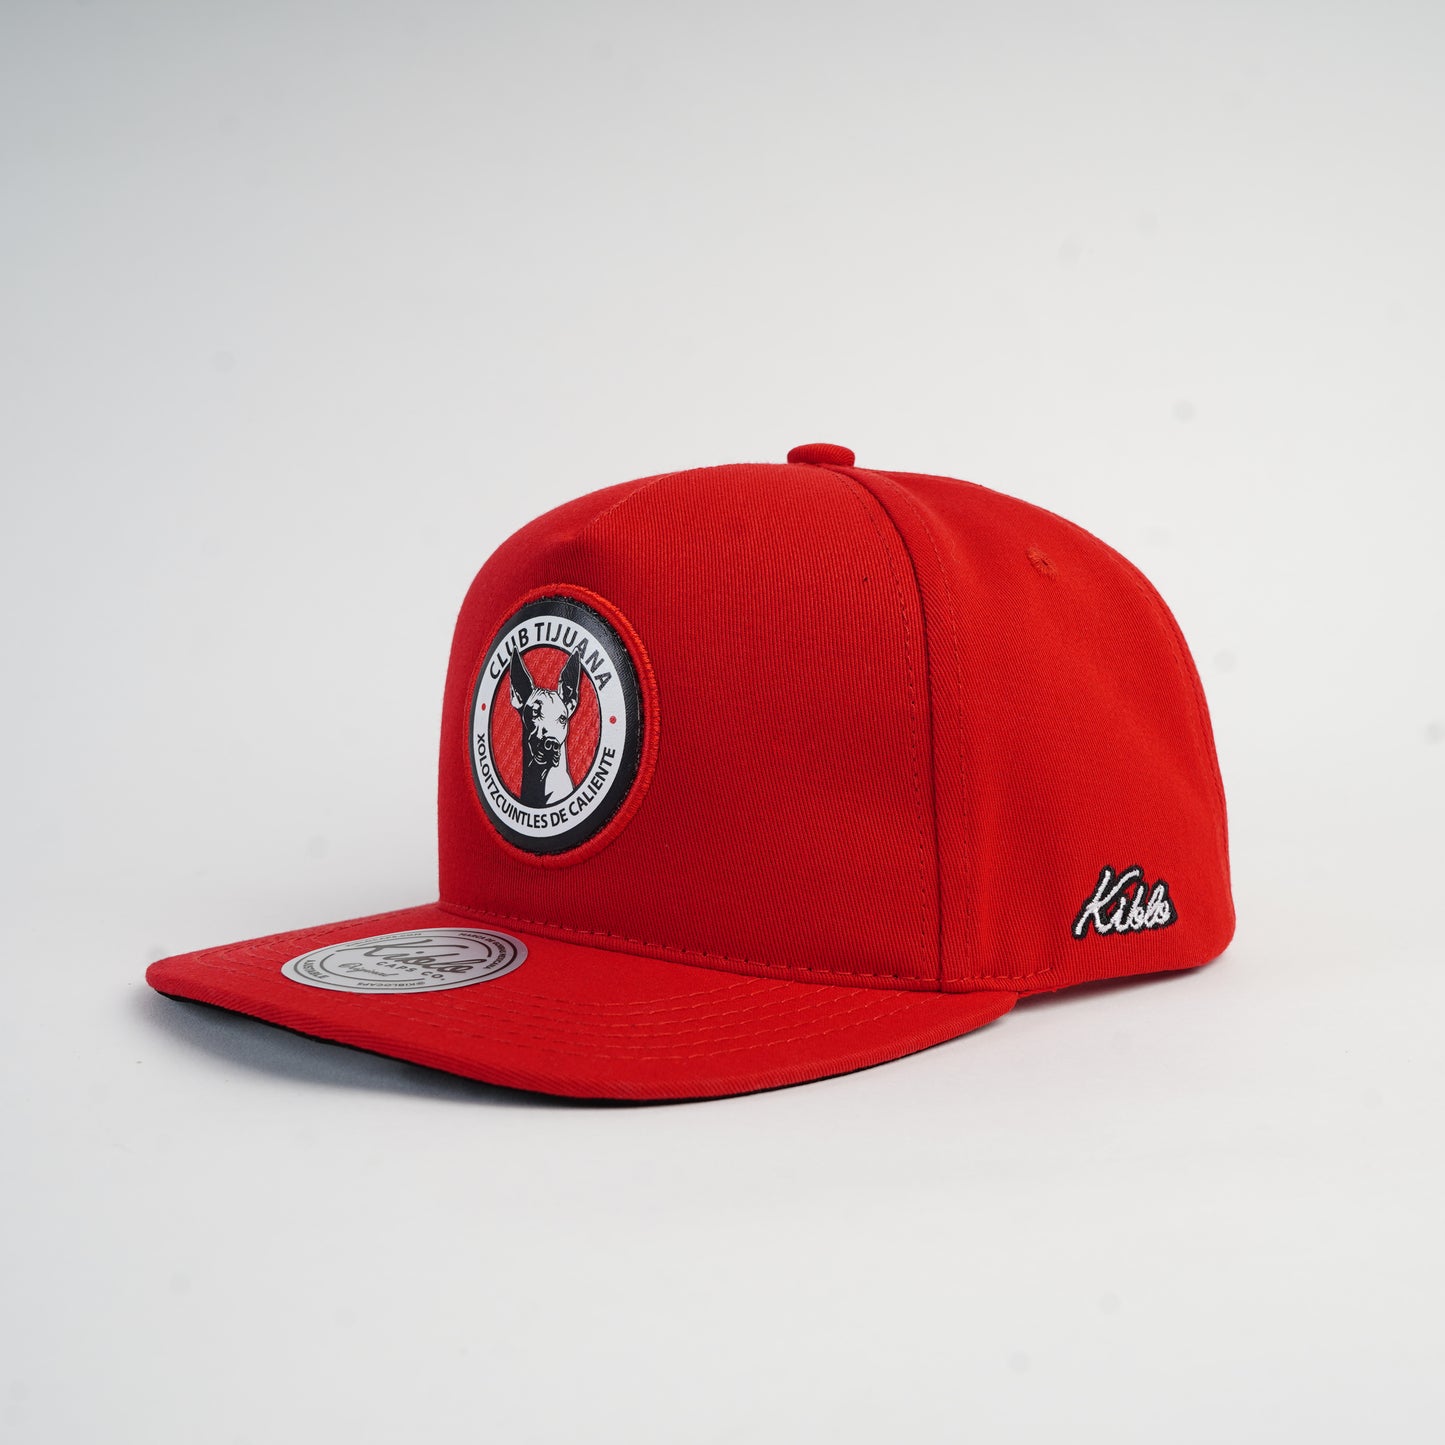 Xolos - Red Cap